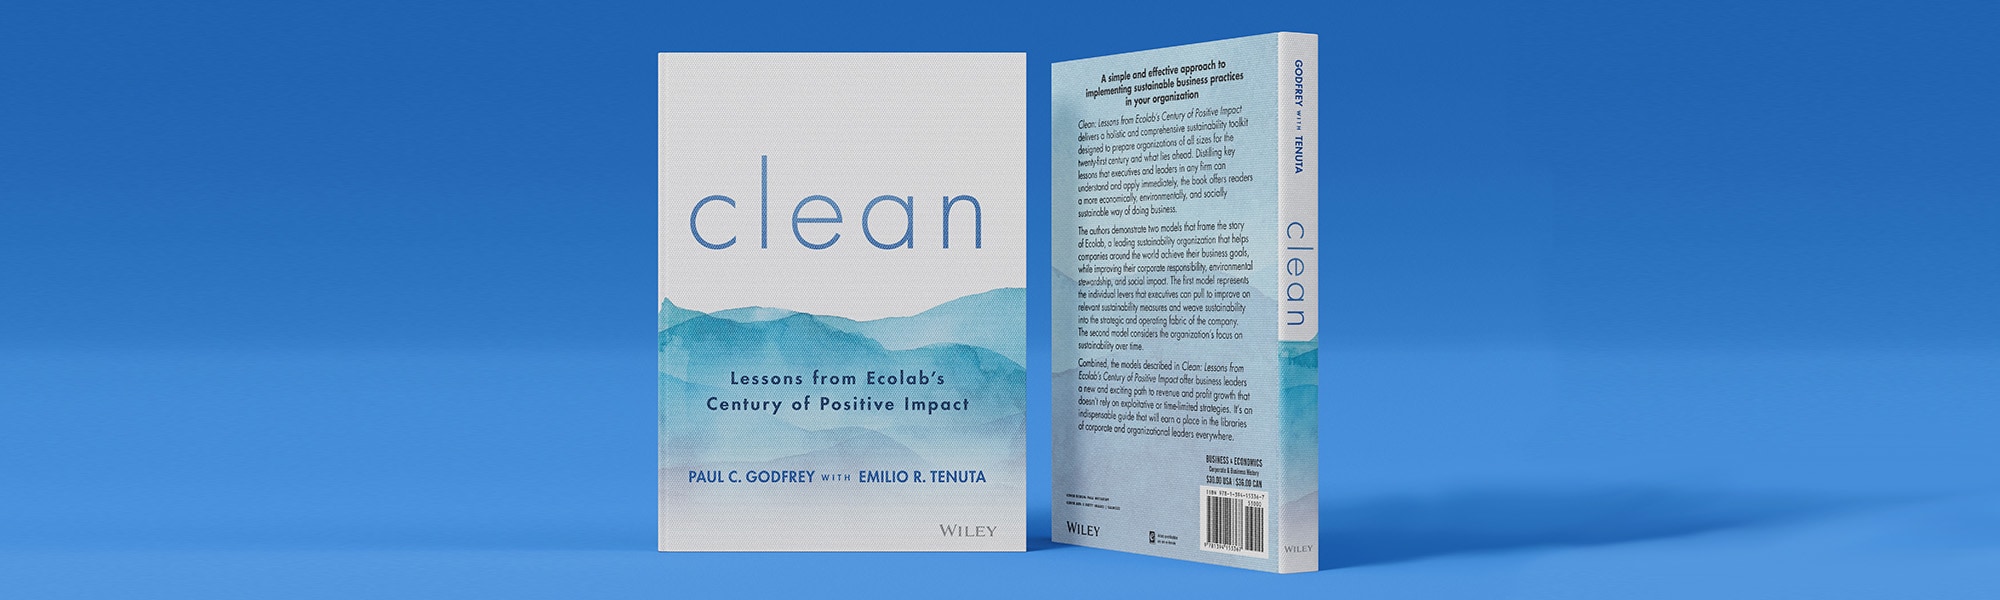 "Clean" book cover